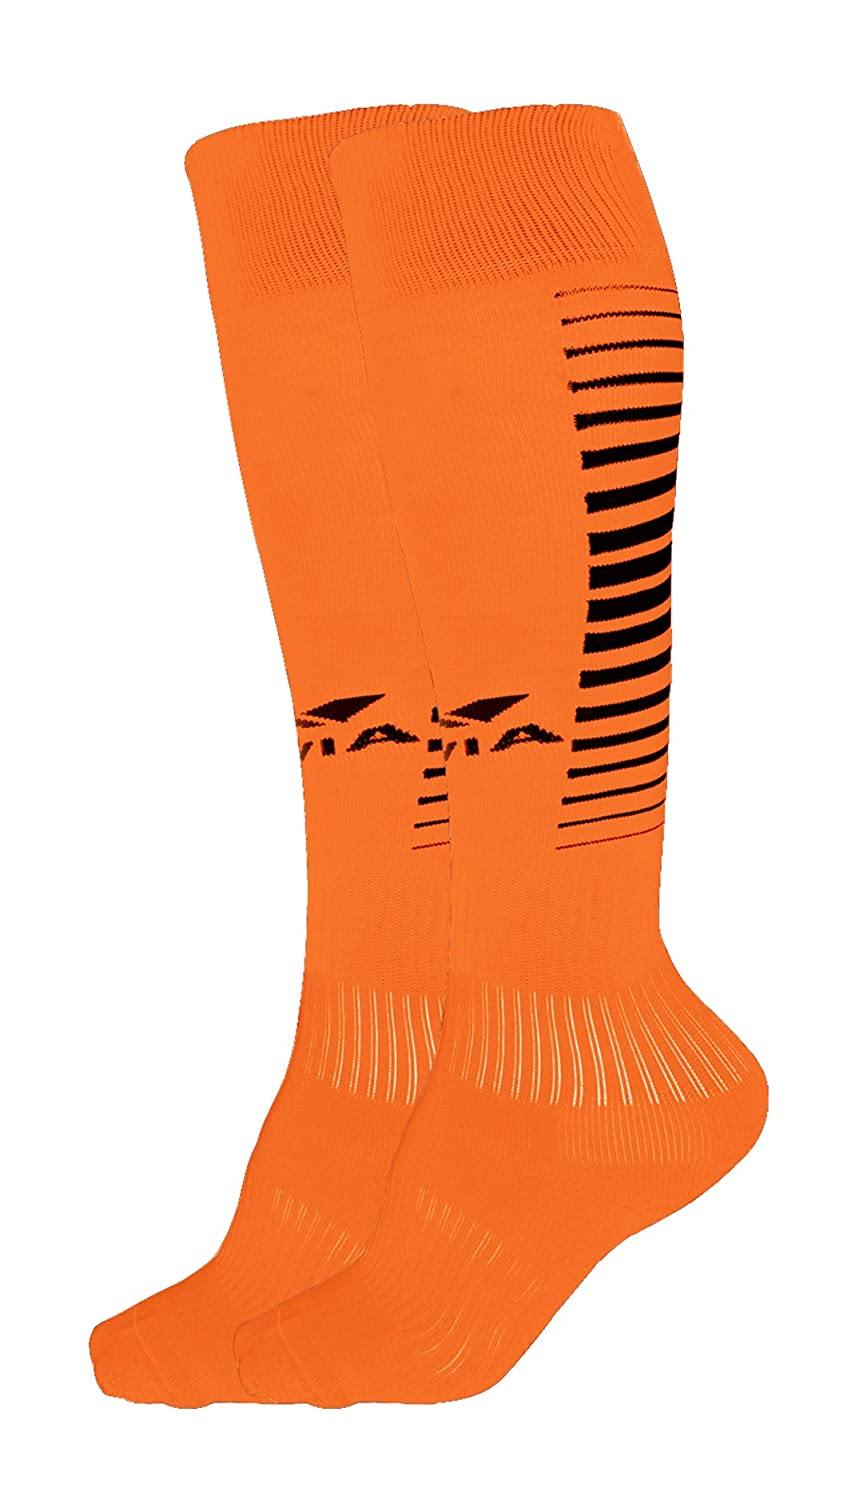 Nivia Encounter Football Socks - Orange/Black - Best Price online Prokicksports.com